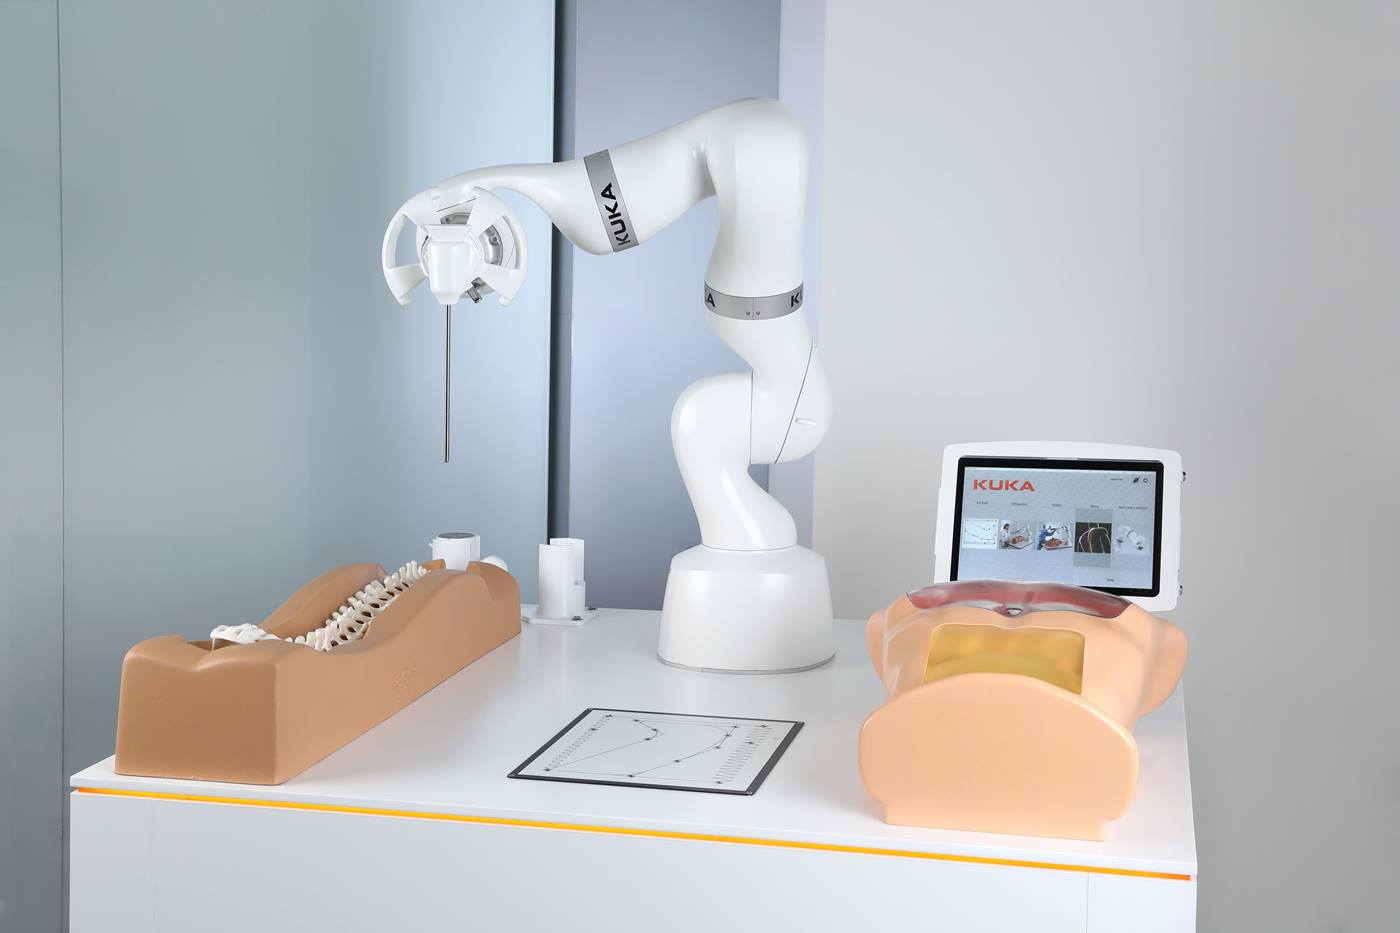 KUKA LBR Med medical robotics features